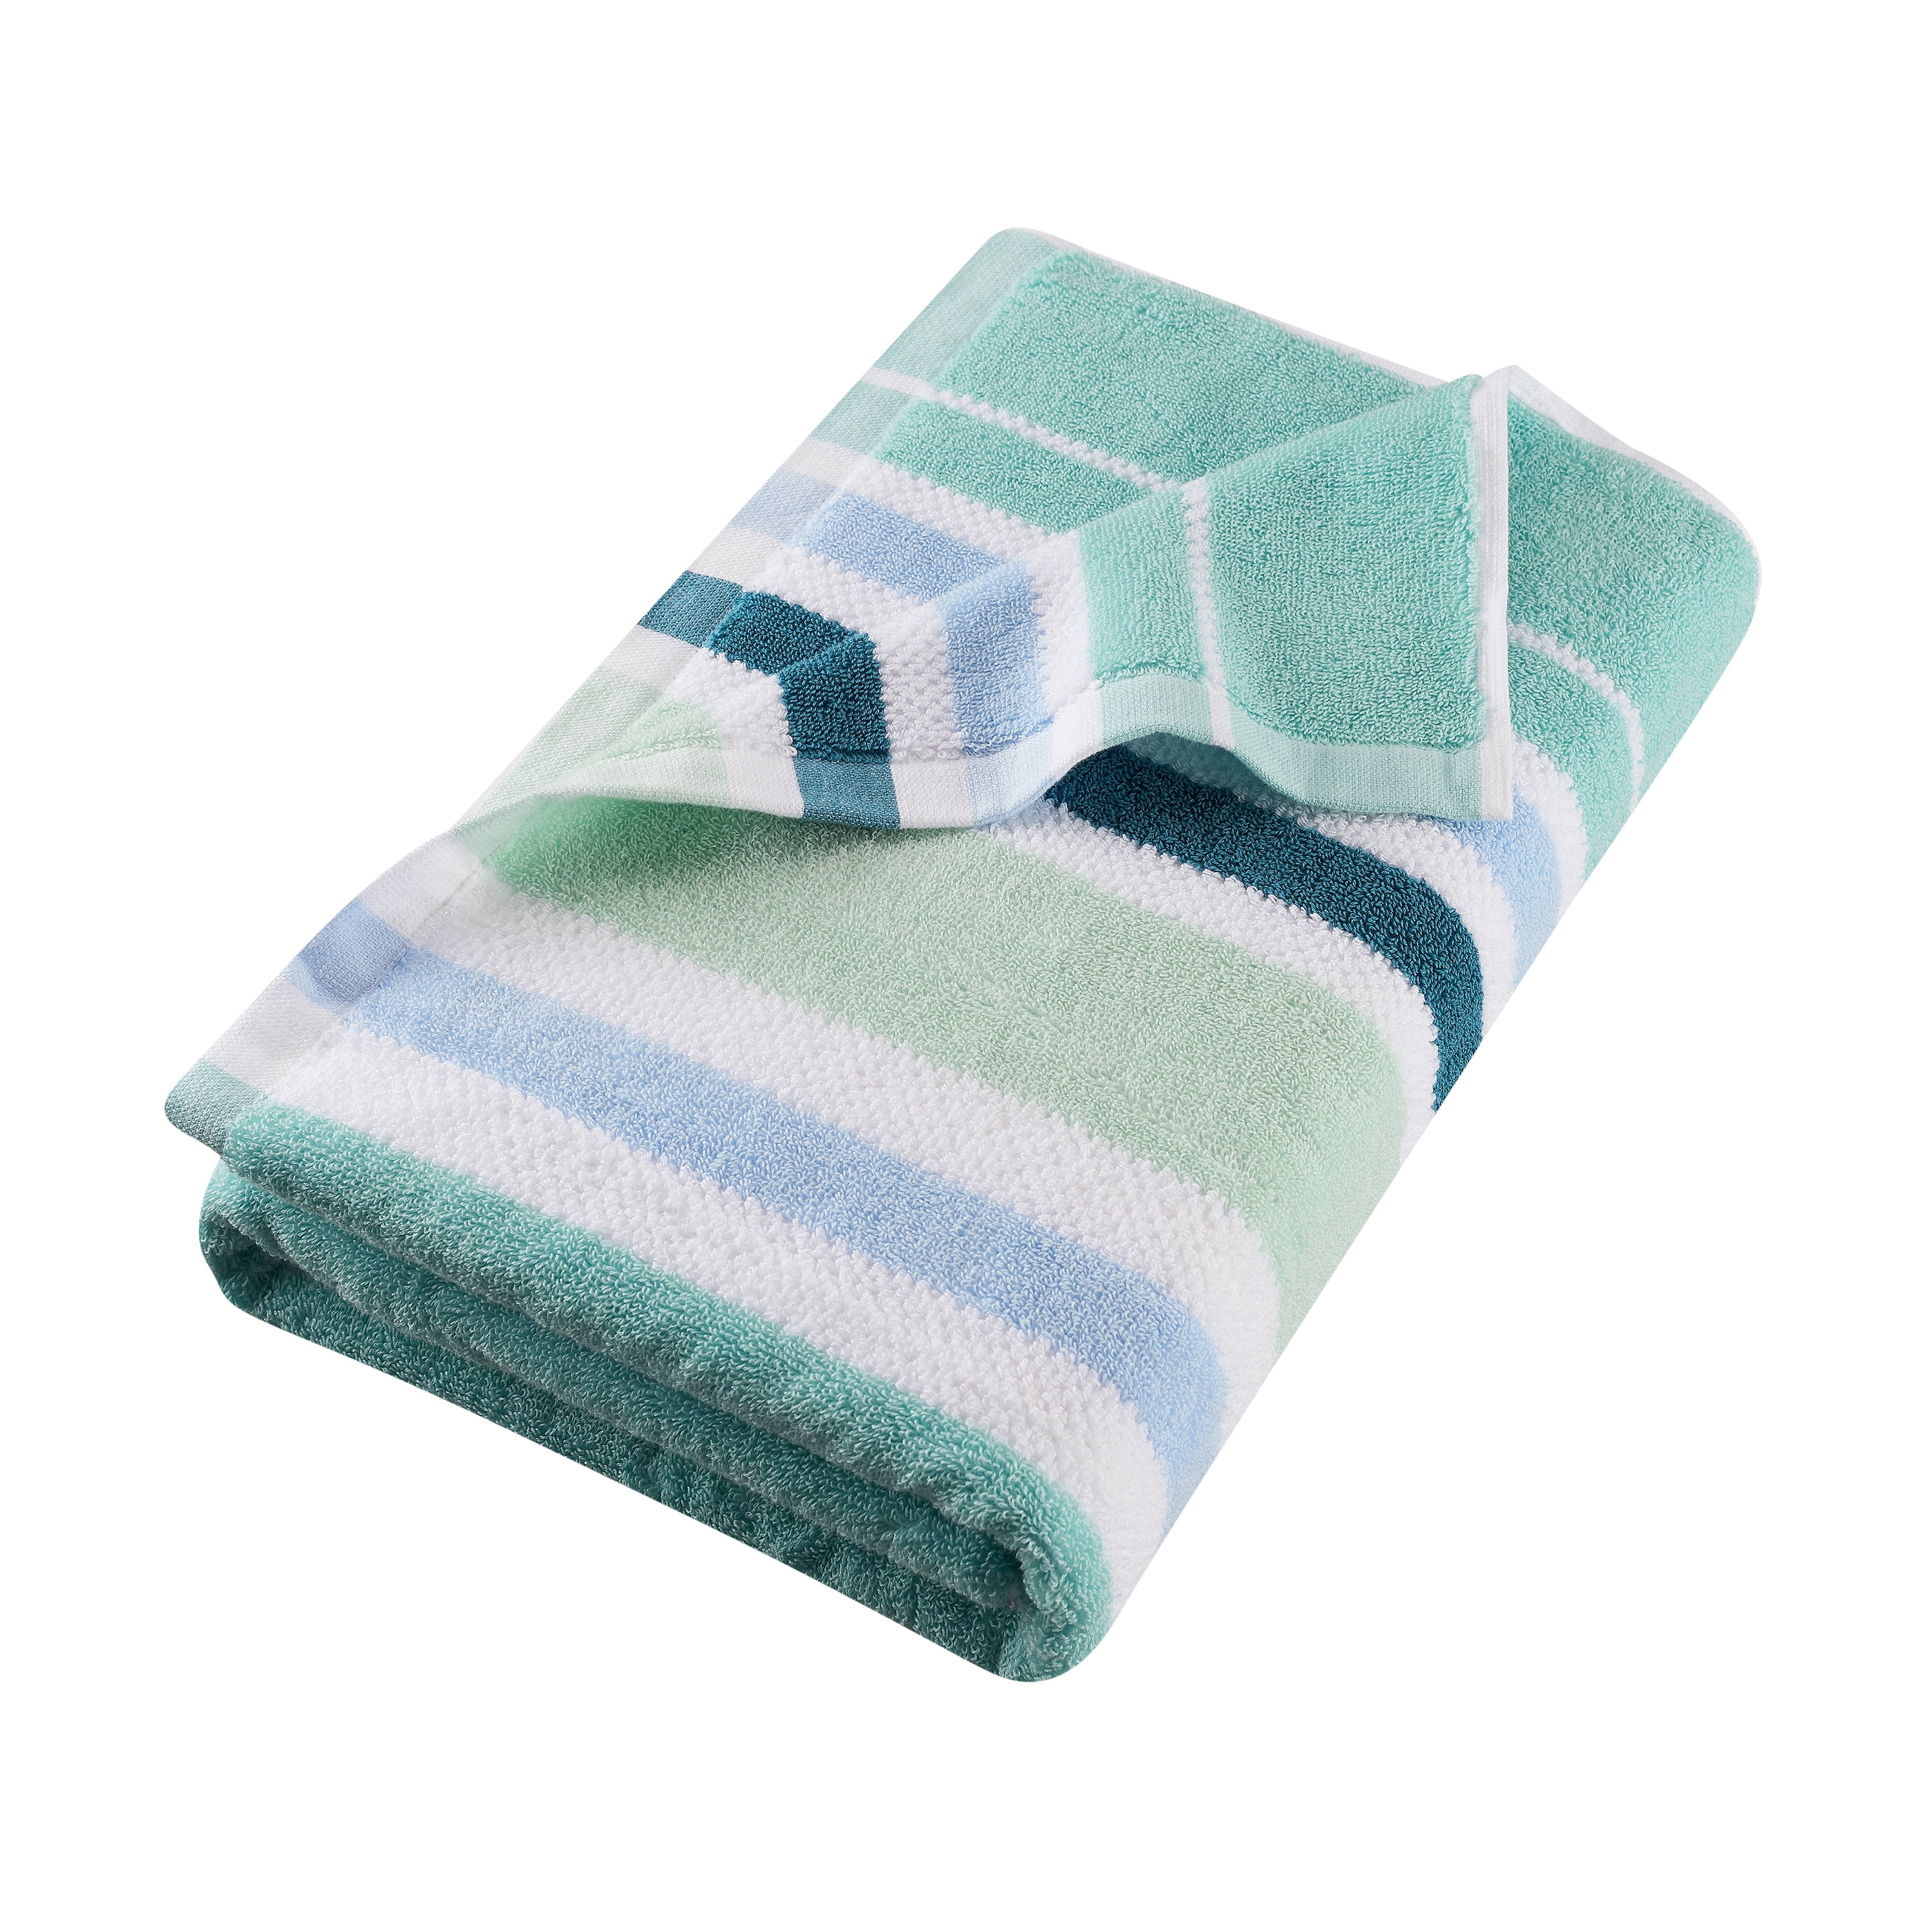 Basics Fade-Resistant Cotton Bath Sheet Teal 2-Pack